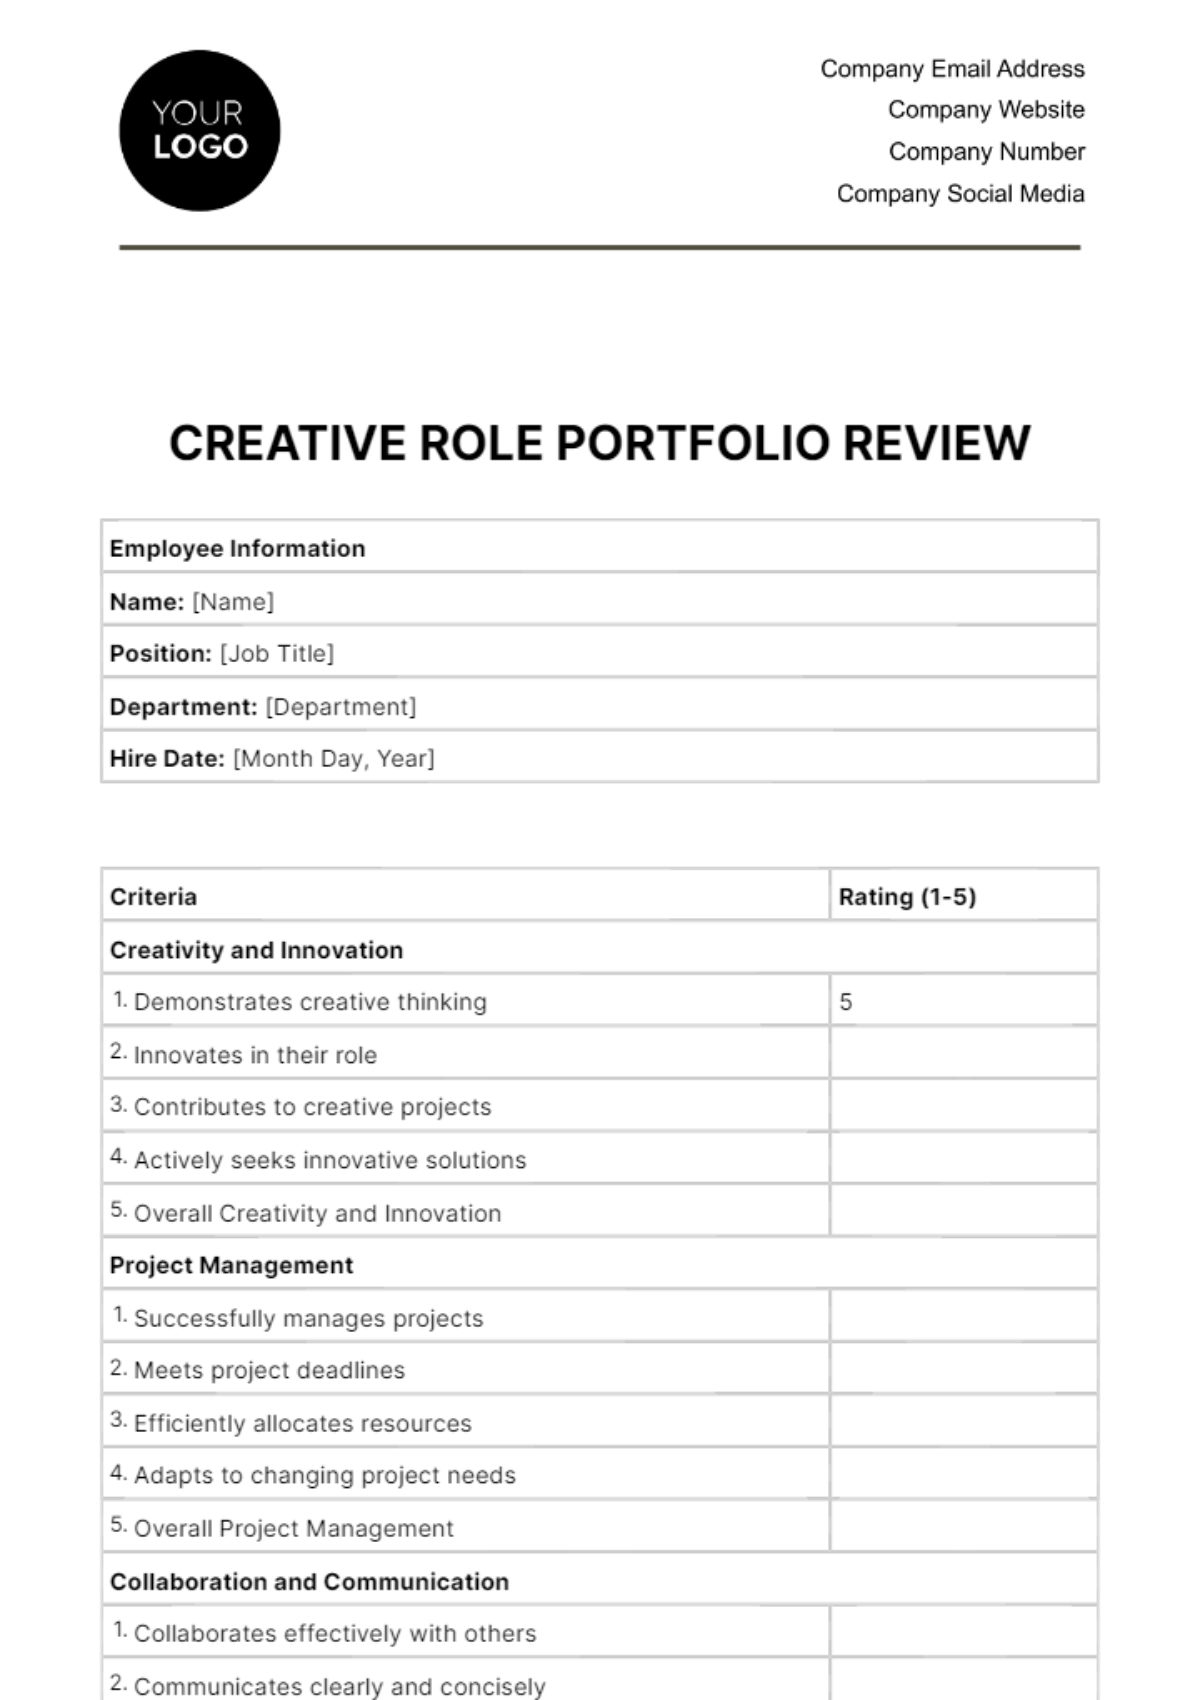 Free Creative Role Portfolio Review Criteria HR Template